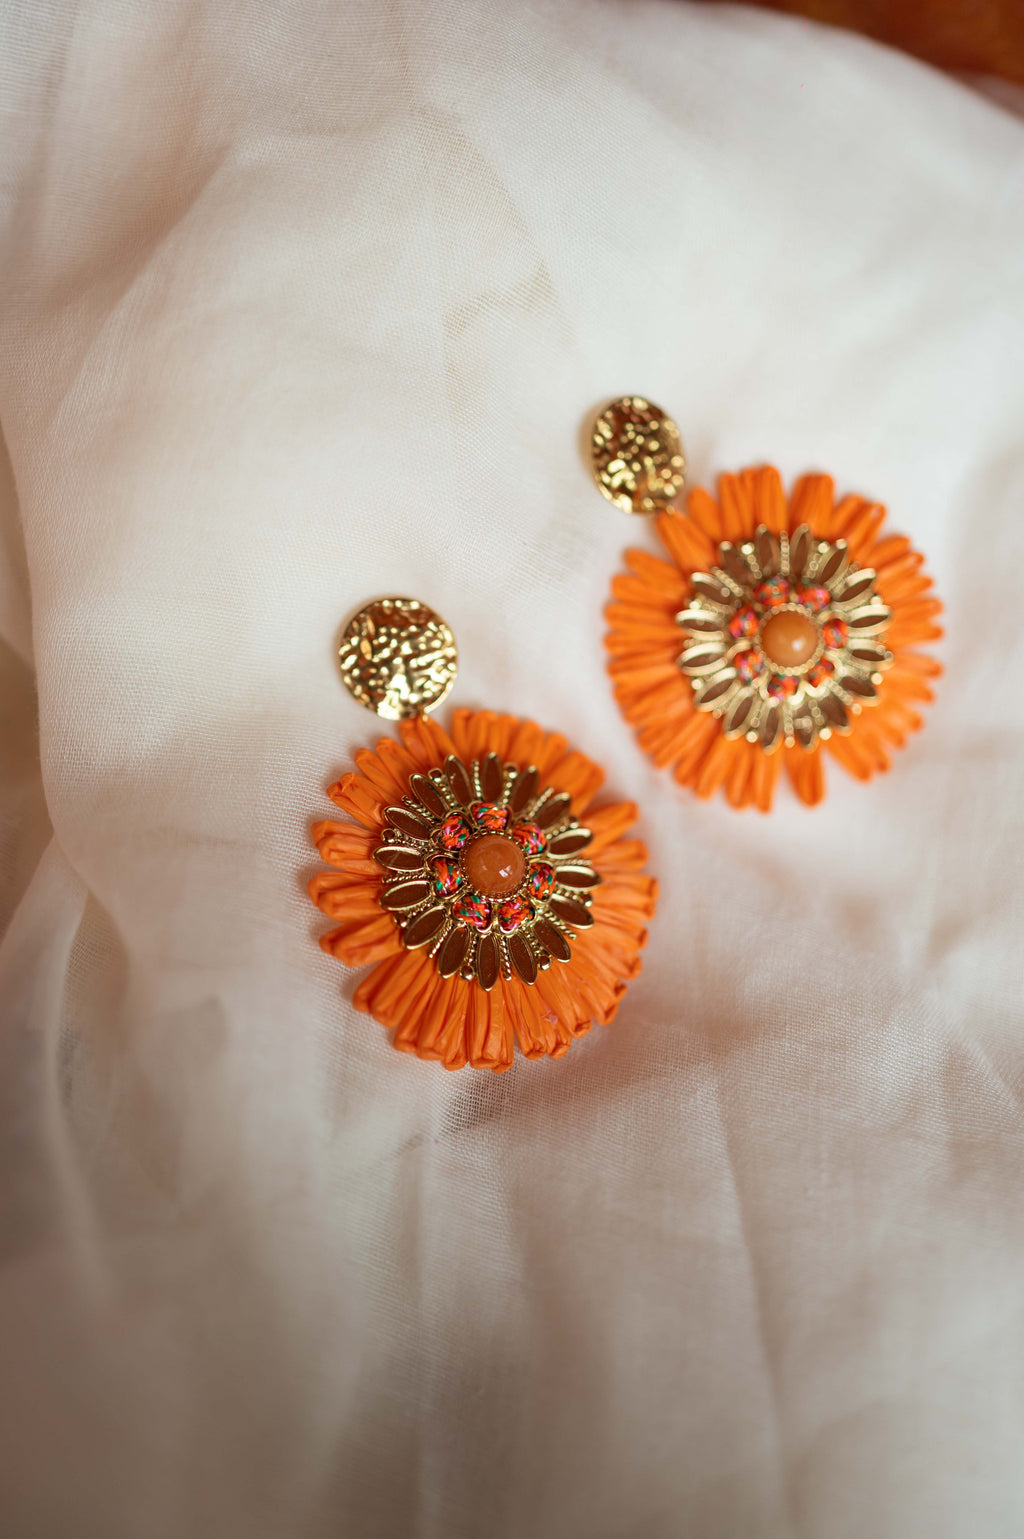 Aynu earrings - orange and golden